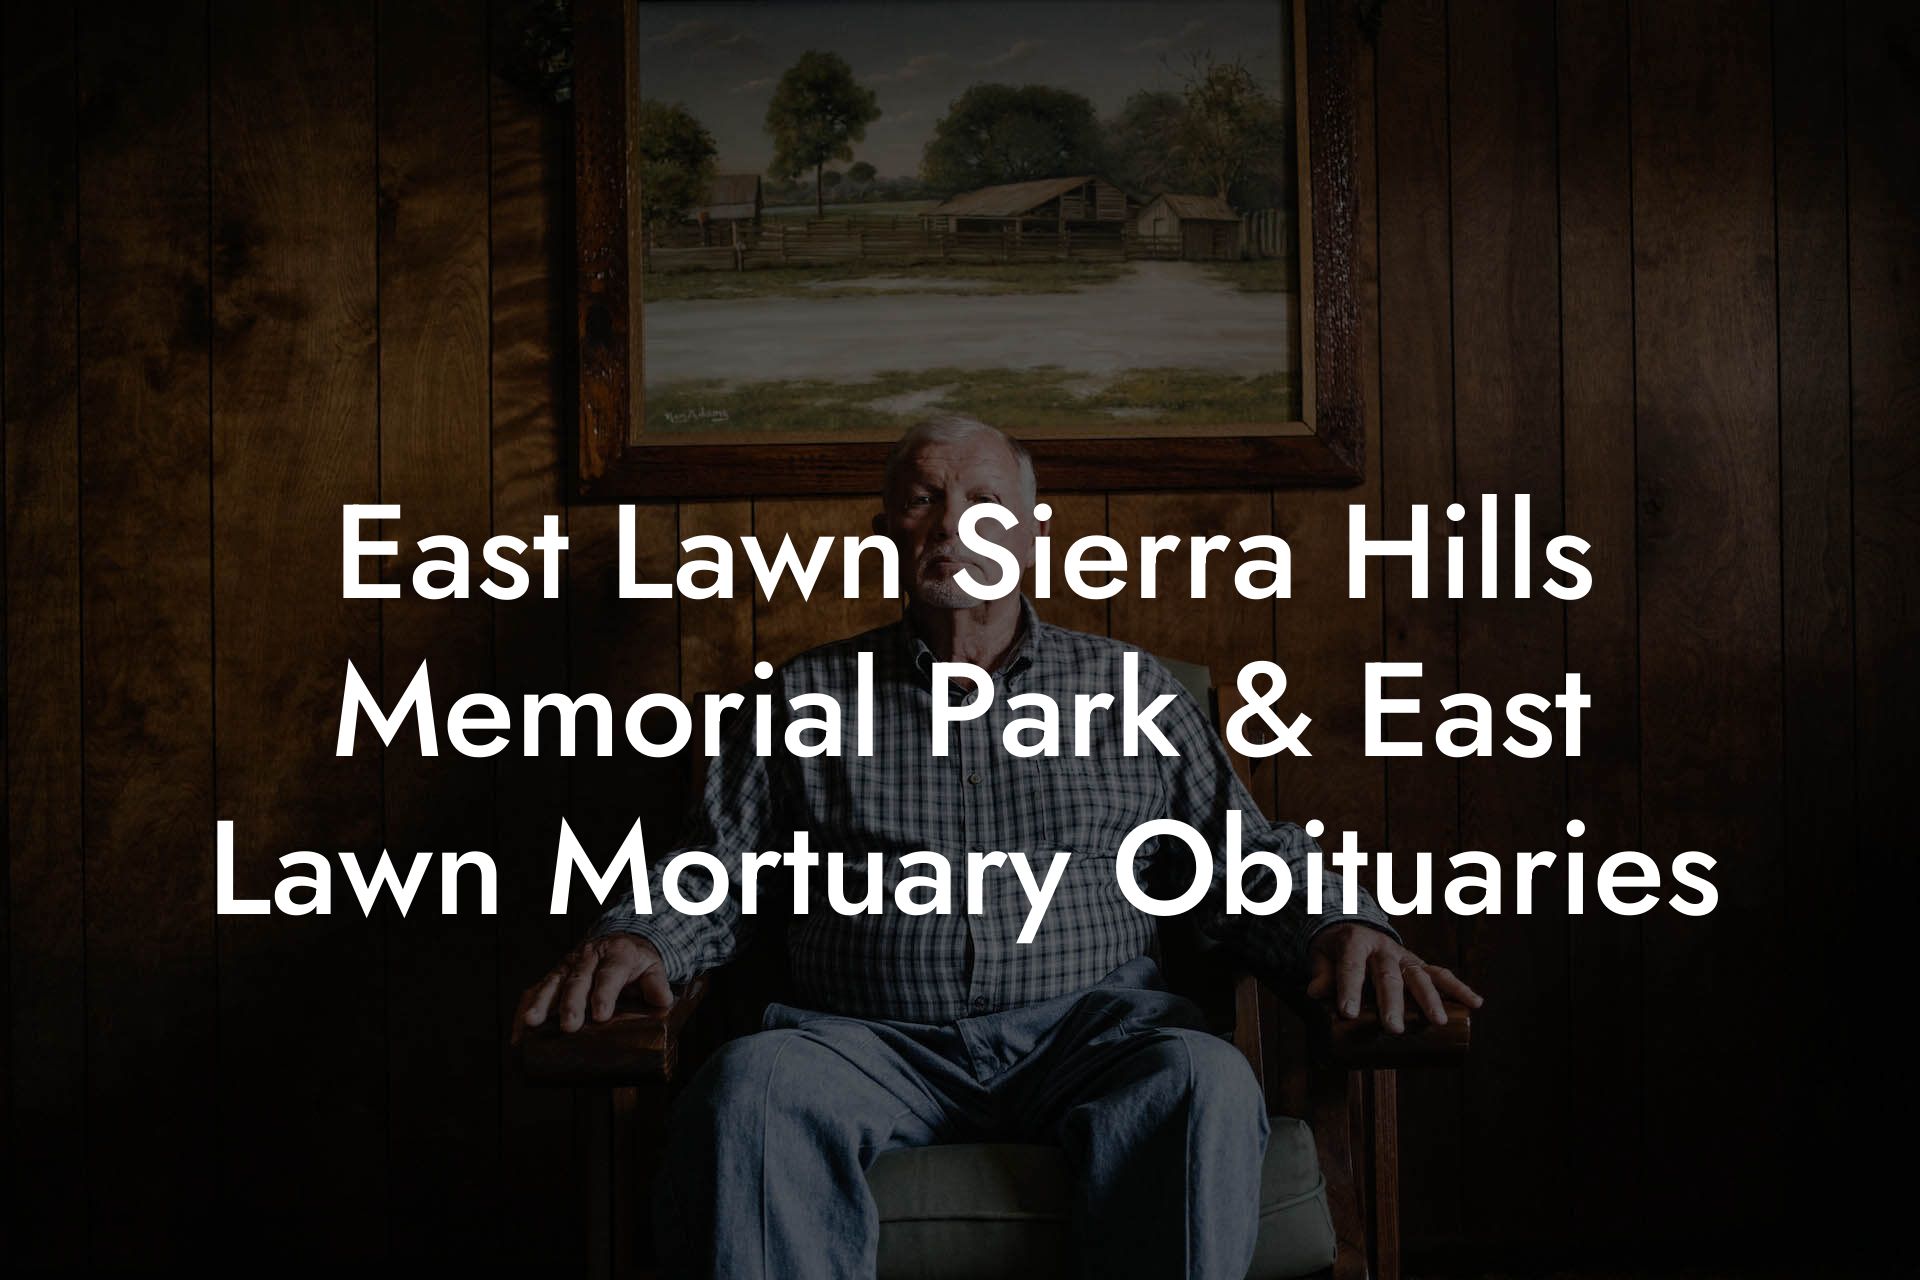 East Lawn Sierra Hills Memorial Park & East Lawn Mortuary Obituaries